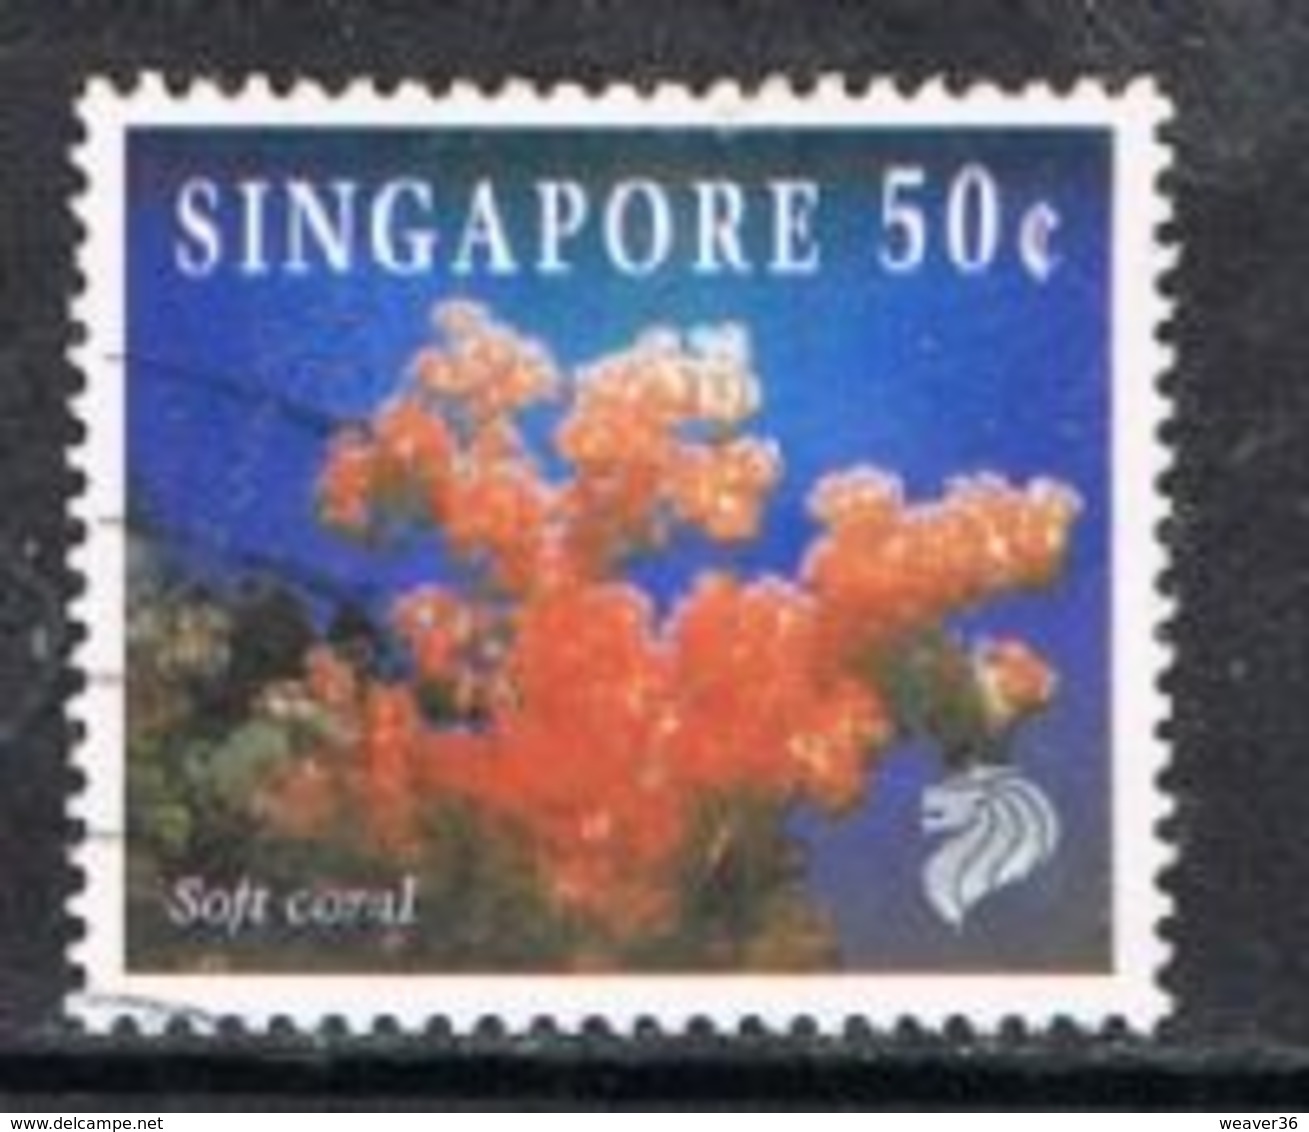 Singapore SG753f 1996 Definitive 50c Good/fine Used [15/14358/2D] - Singapore (1959-...)